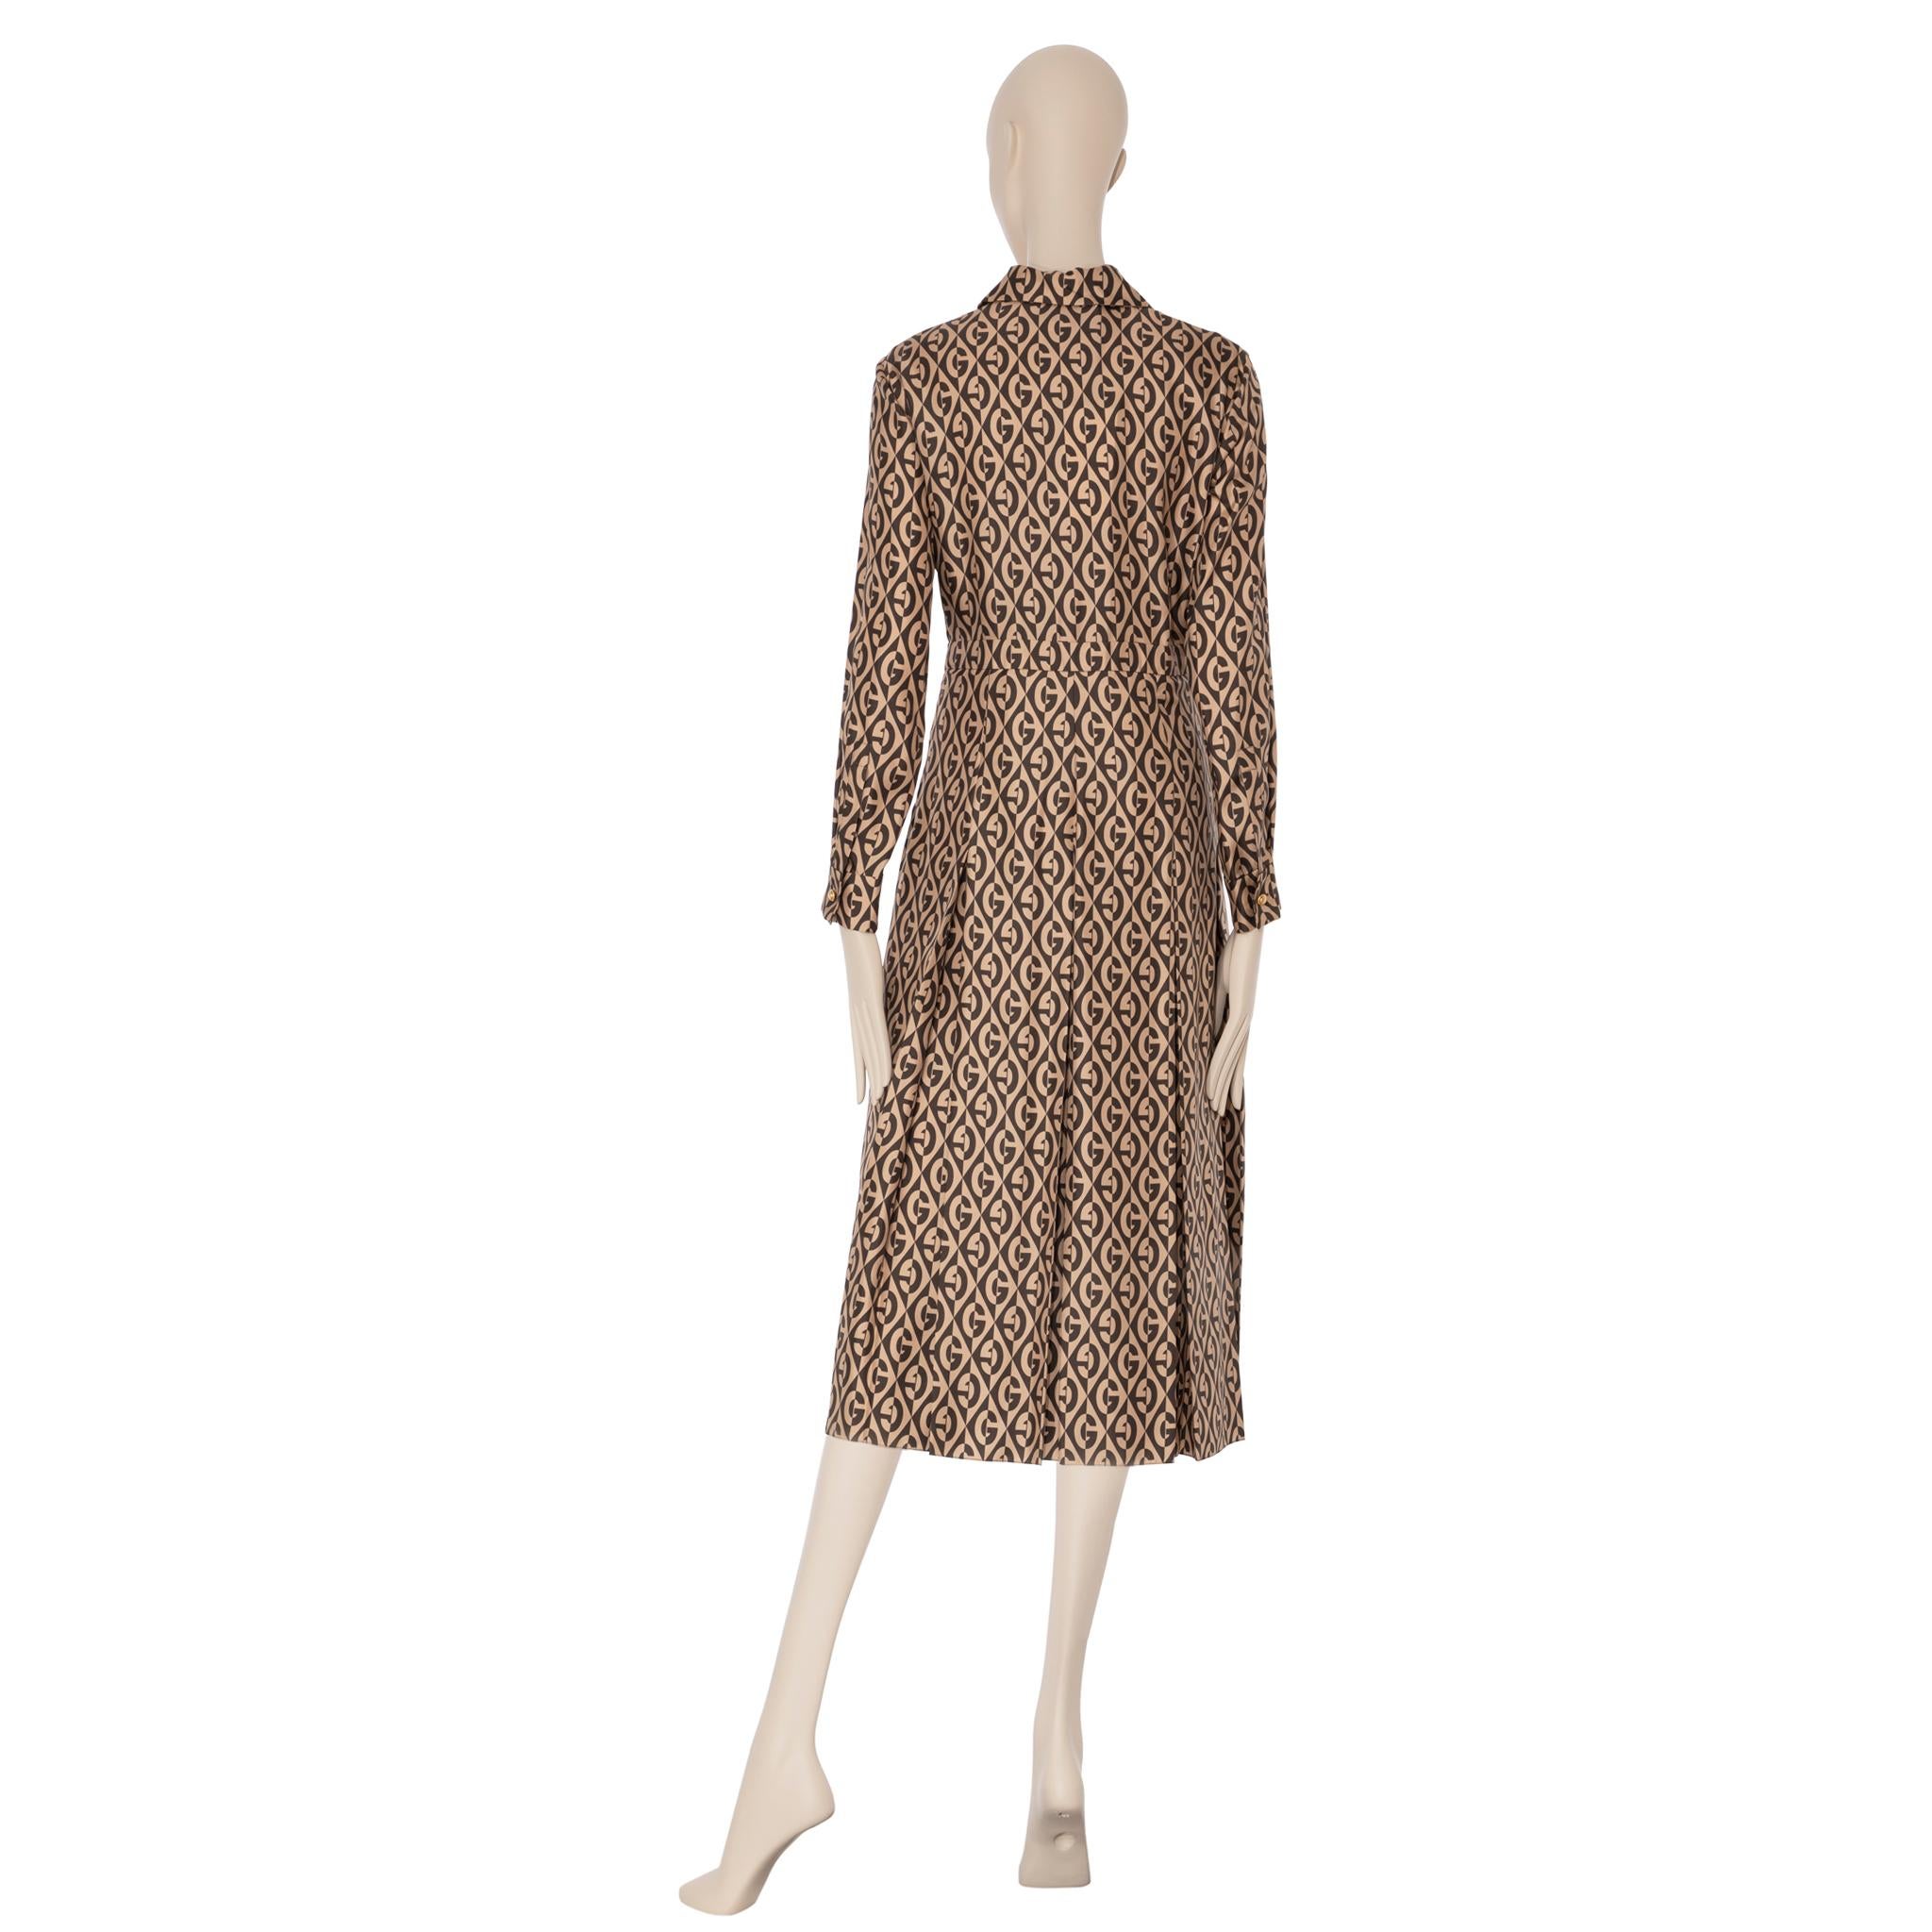 Gucci G Rhombus Brown & Ivory Print Dress Silk 40 IT For Sale 6